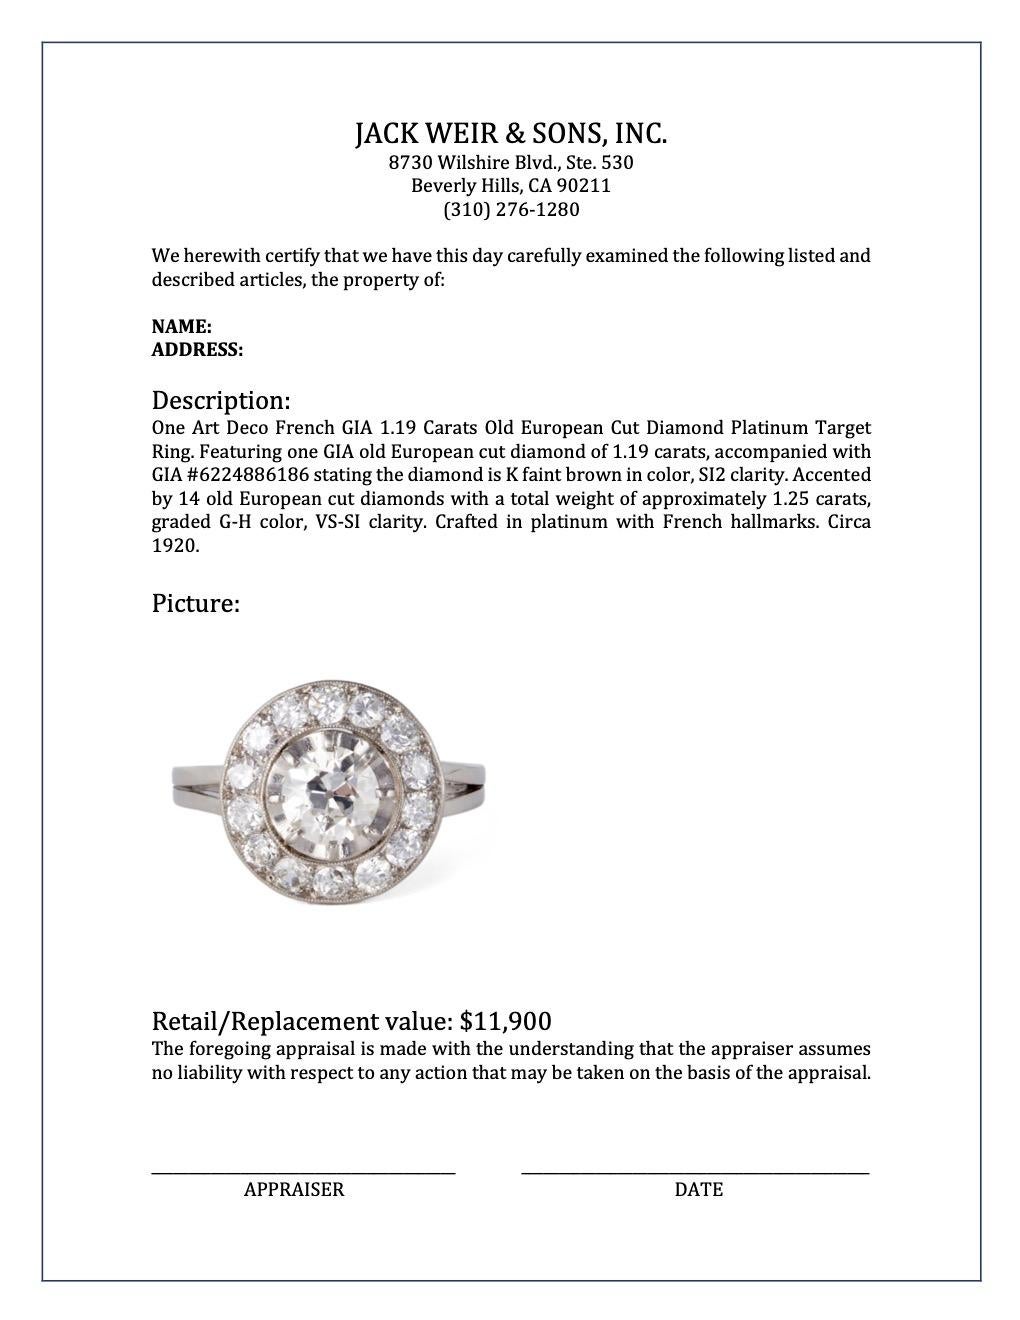 Art Deco French GIA 1.19 Carats Old European Cut Diamond Platinum Target Ring 4